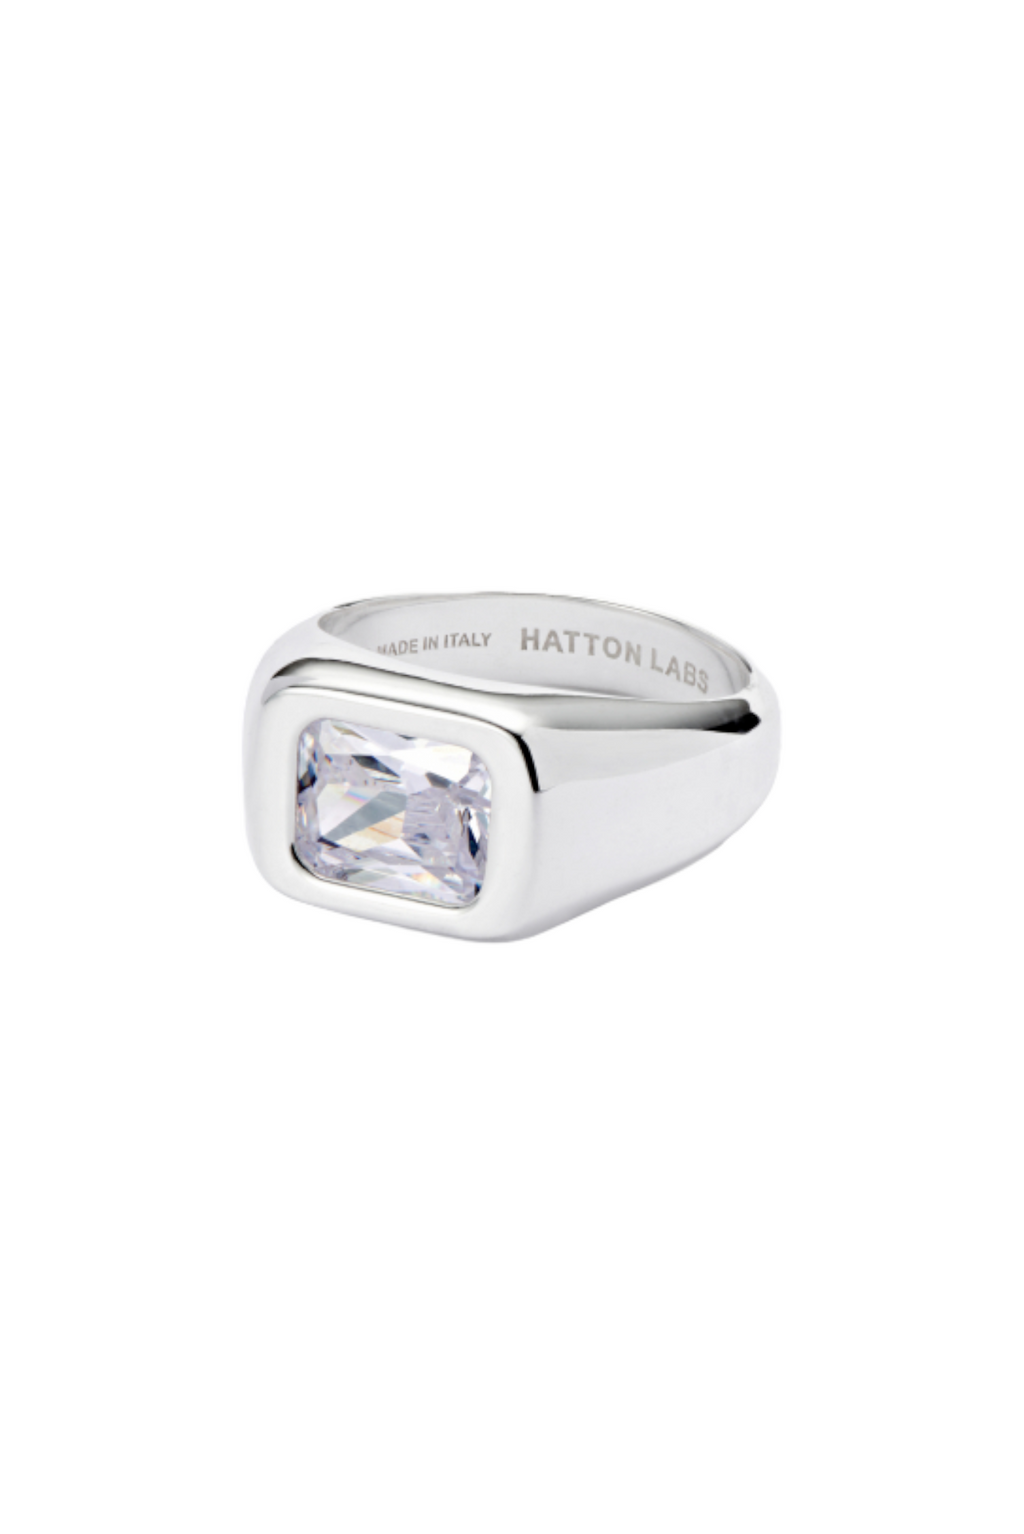 Hatton Labs Emerald Cut Signet Ring